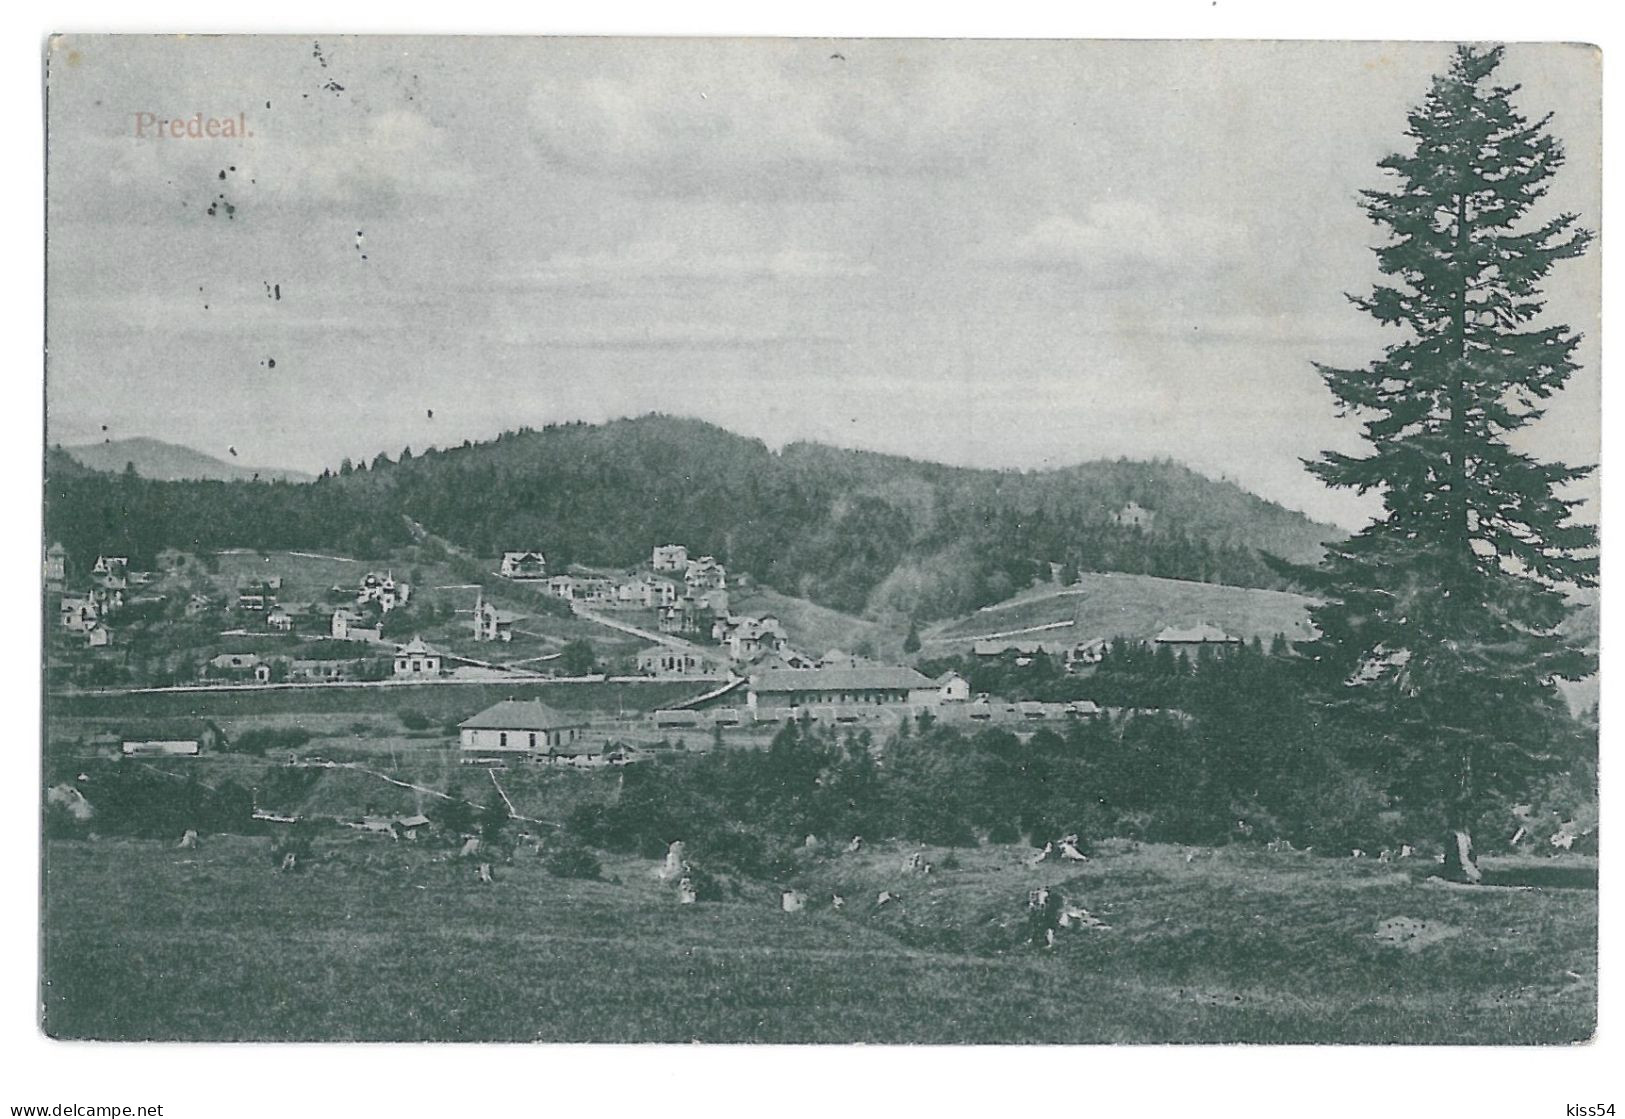 RO 97 - 13582 PREDEAL, Panorama - Old Postcard - Used - 1906 - Romania